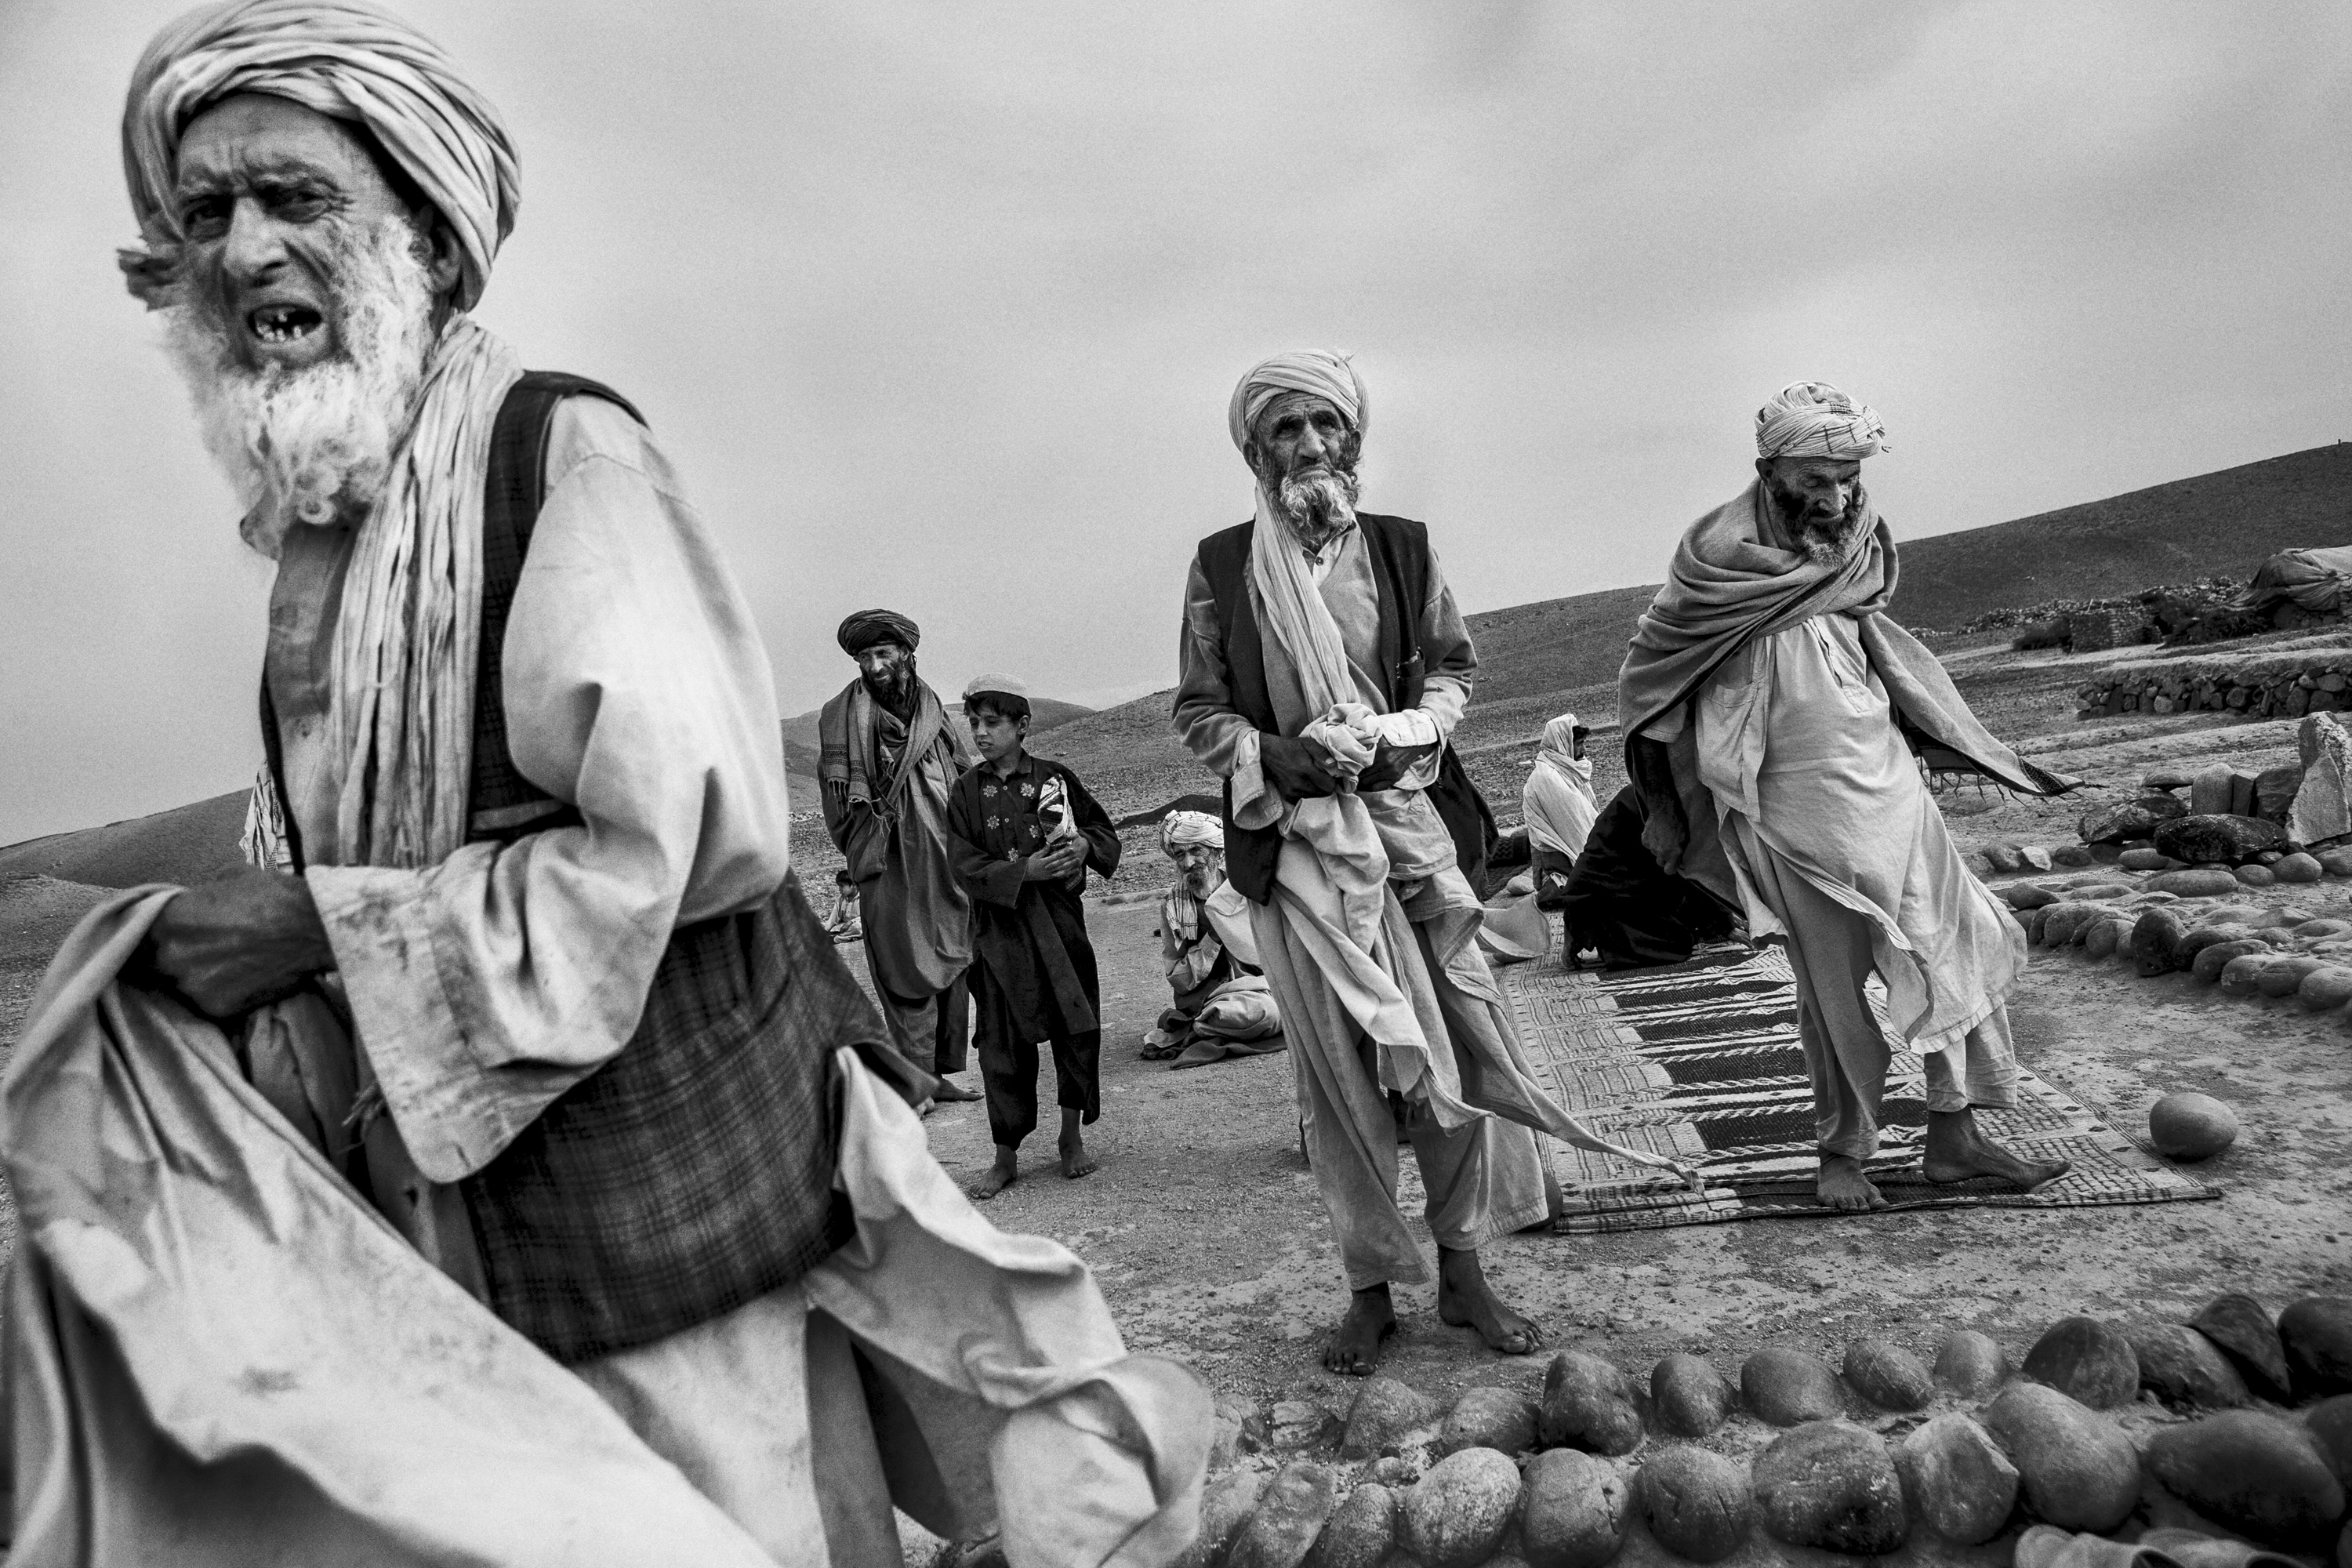 2008. Nangarhar province, Afghanistan.